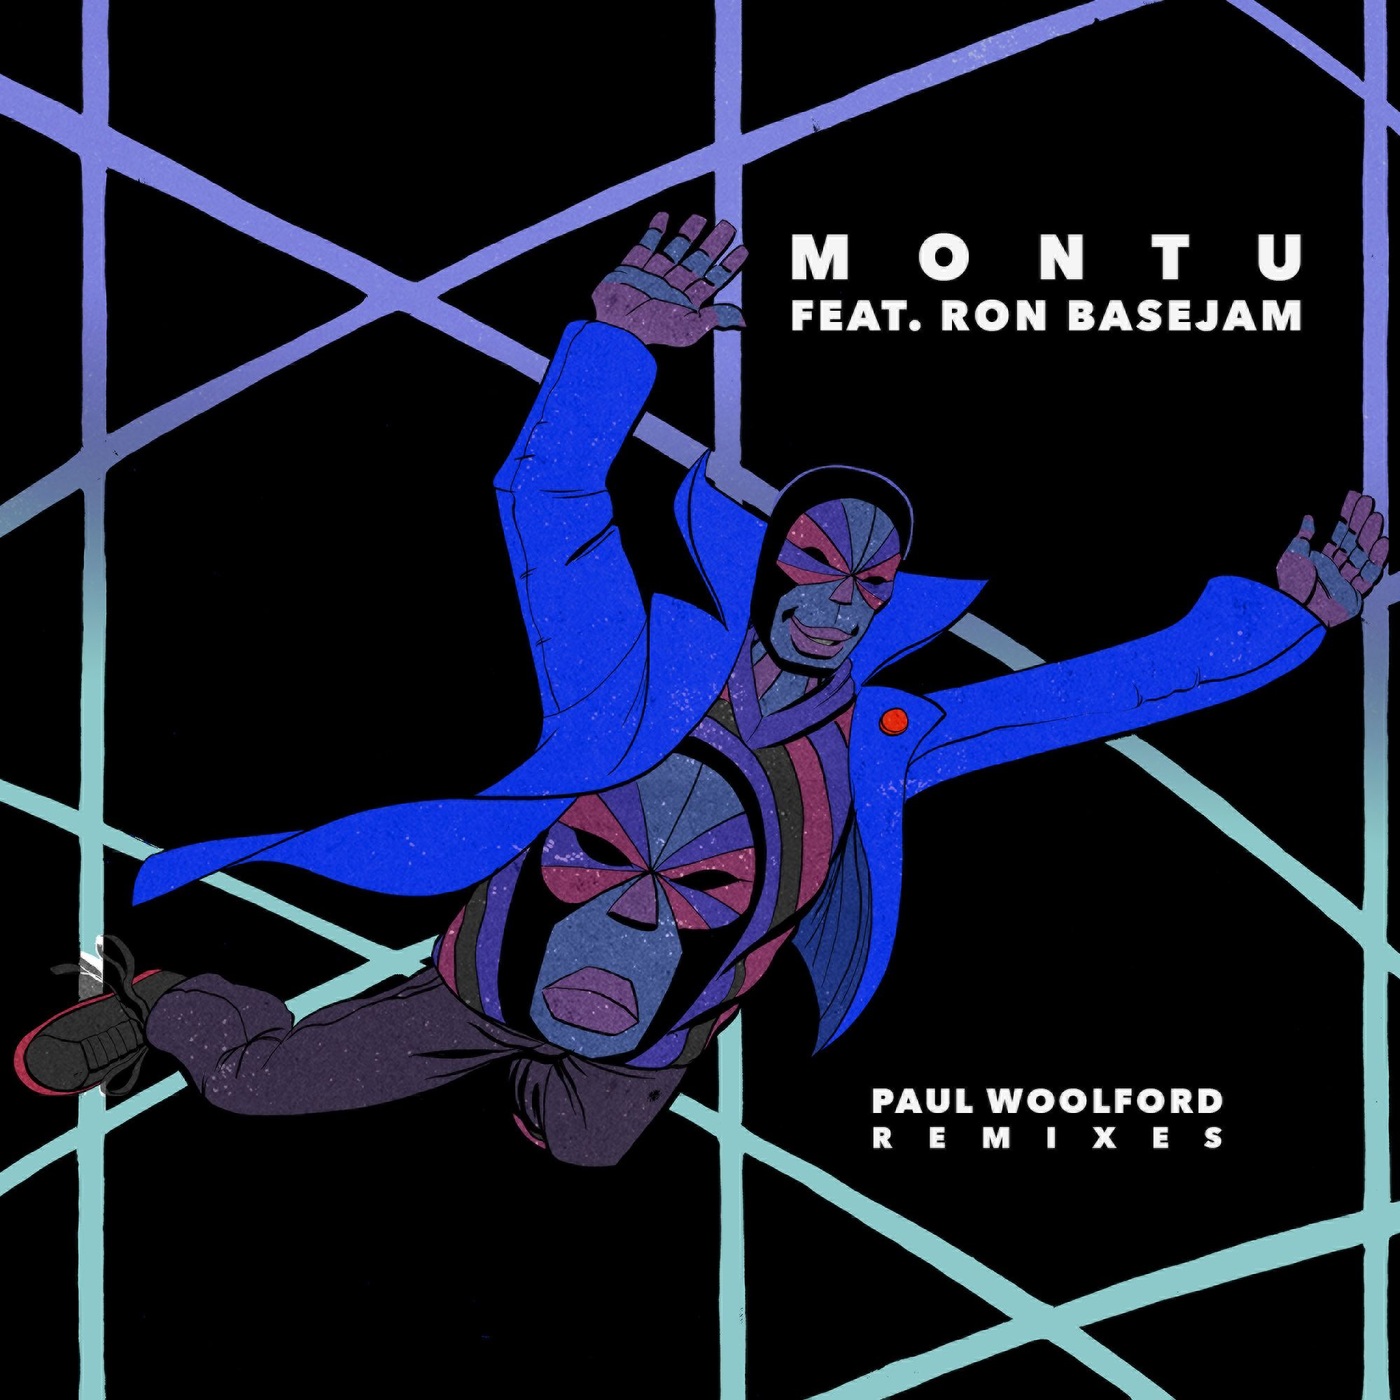 PBR Streetgang - Montu (feat. Ron Basejam) (Paul Woolford Remix) / Skint Records